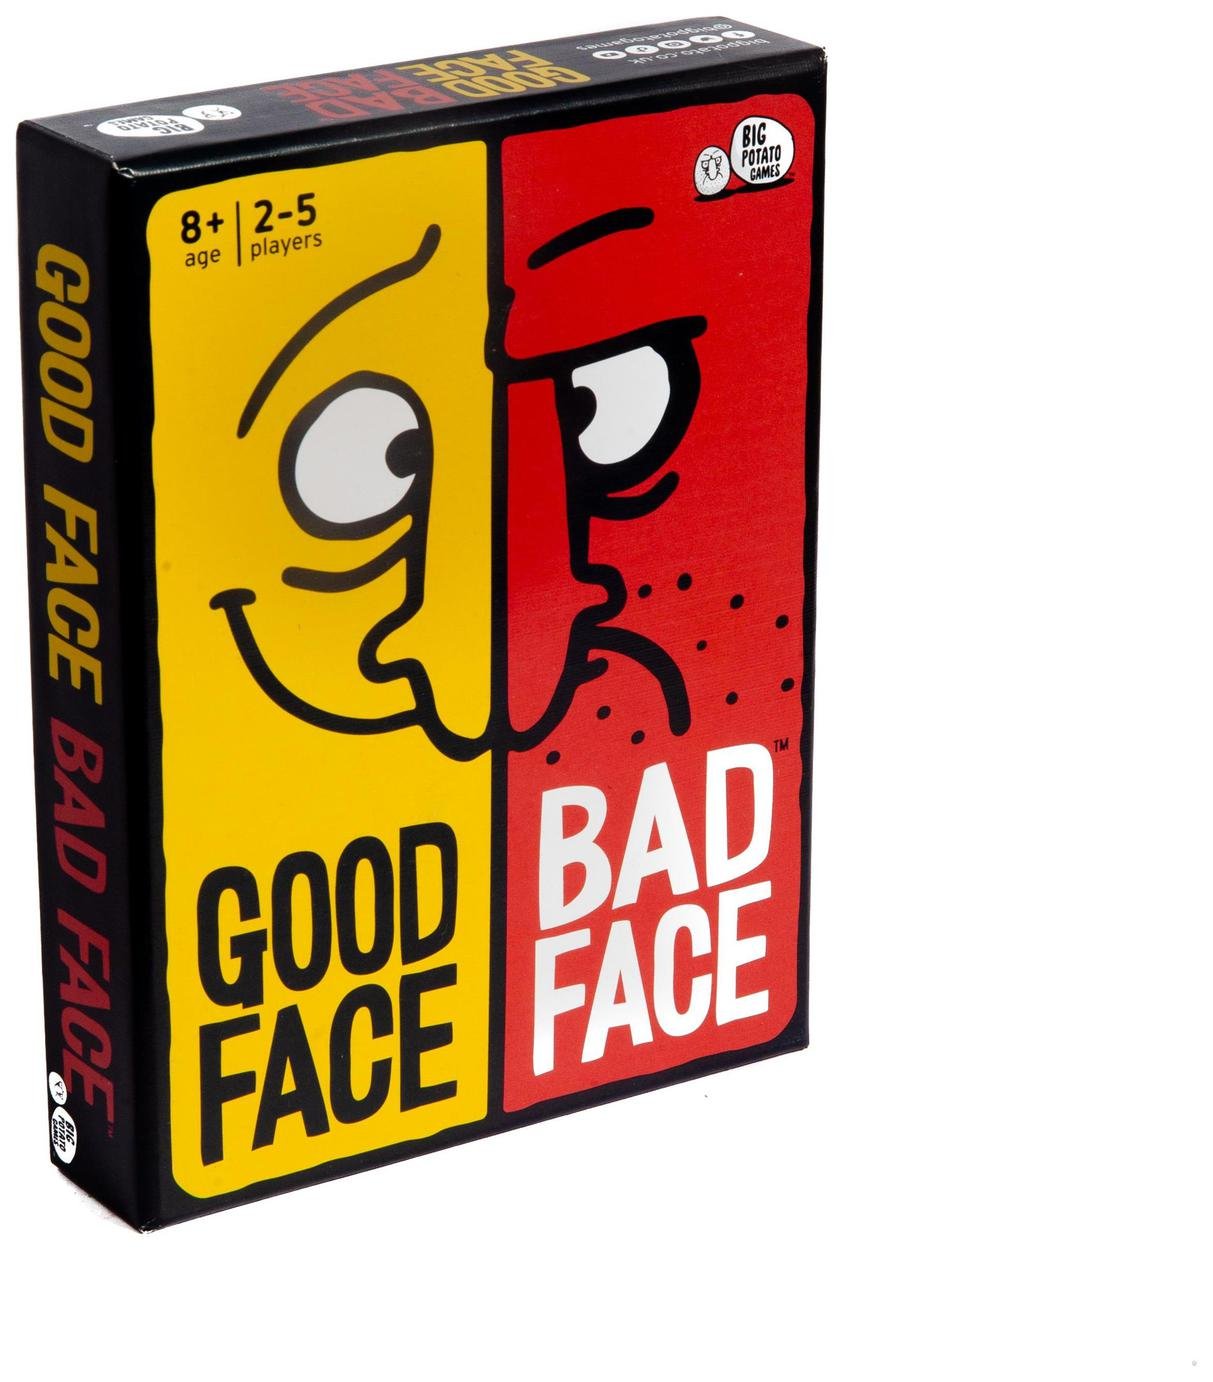 Big Potato Good Face Bad Face Game review